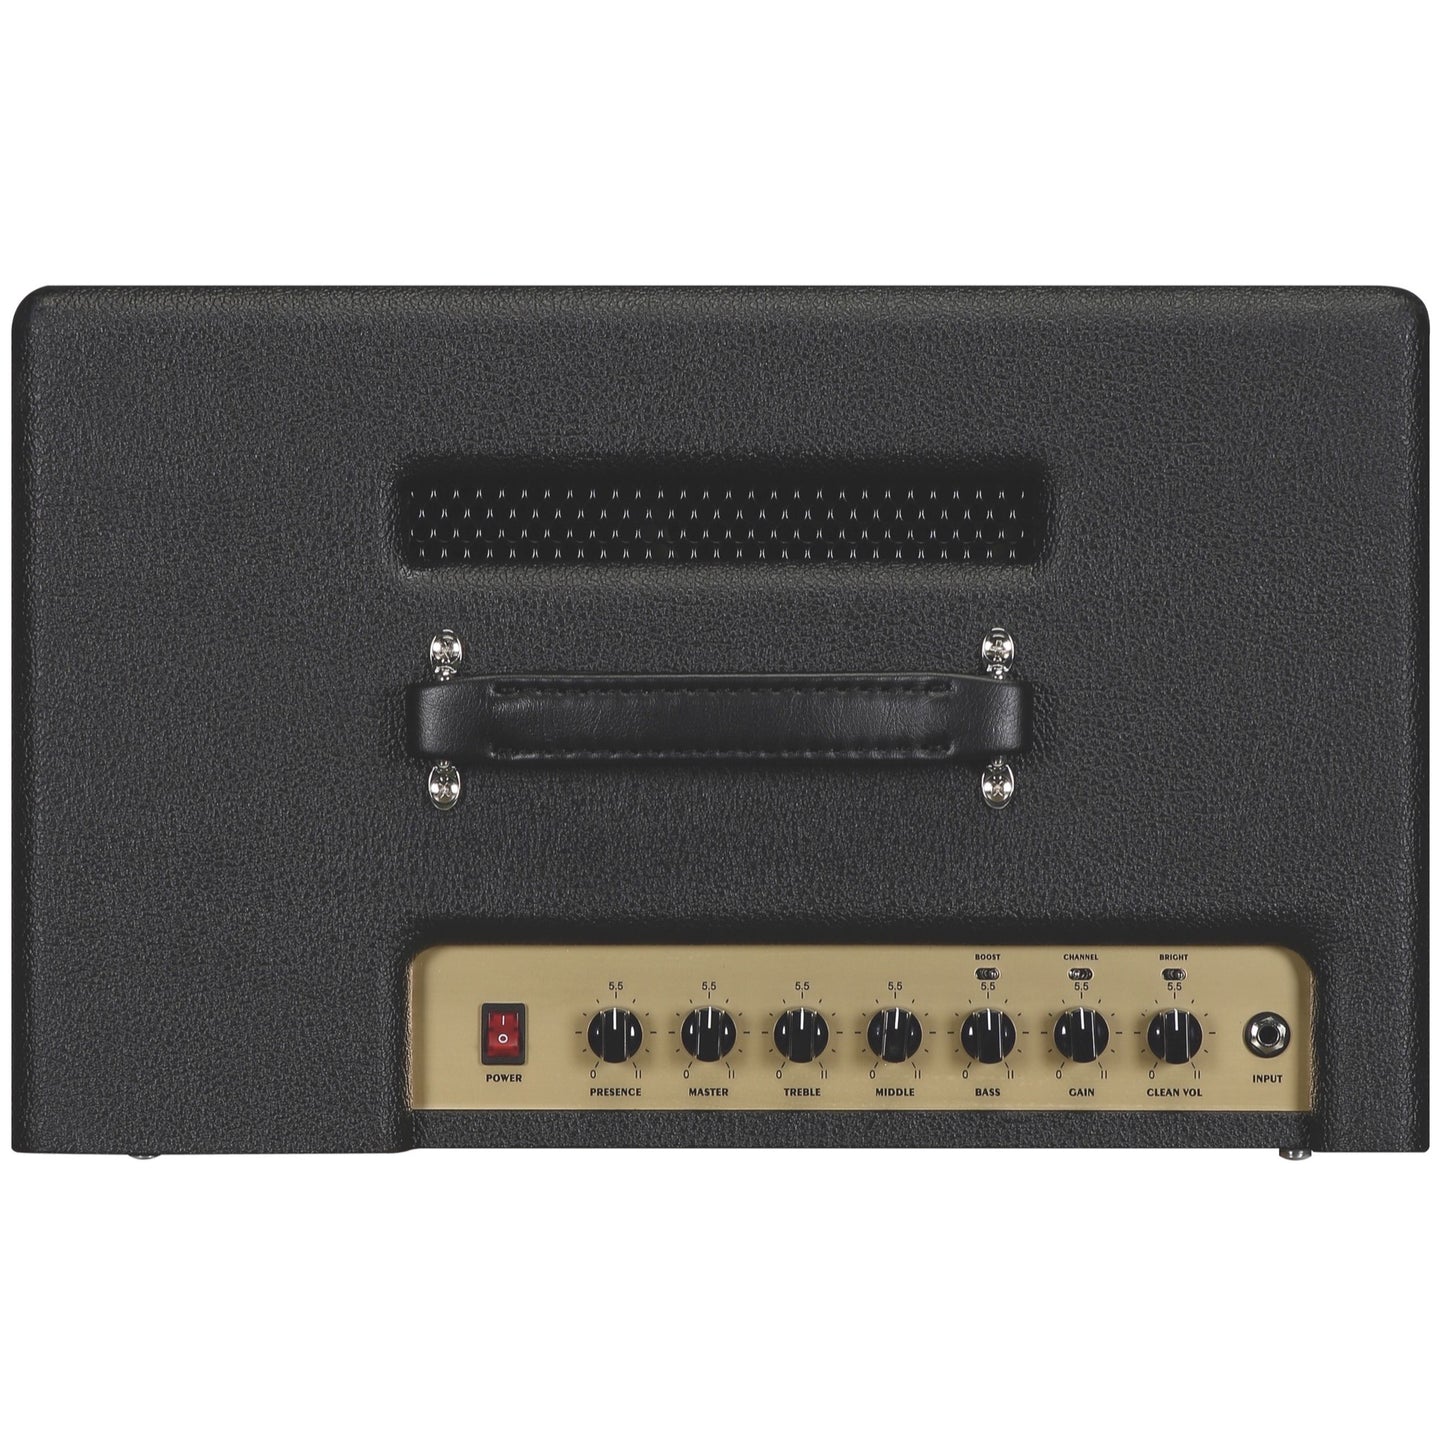 Friedman Runt 20 Guitar Combo Amplifier (20 Watts, 1x12 Inch)